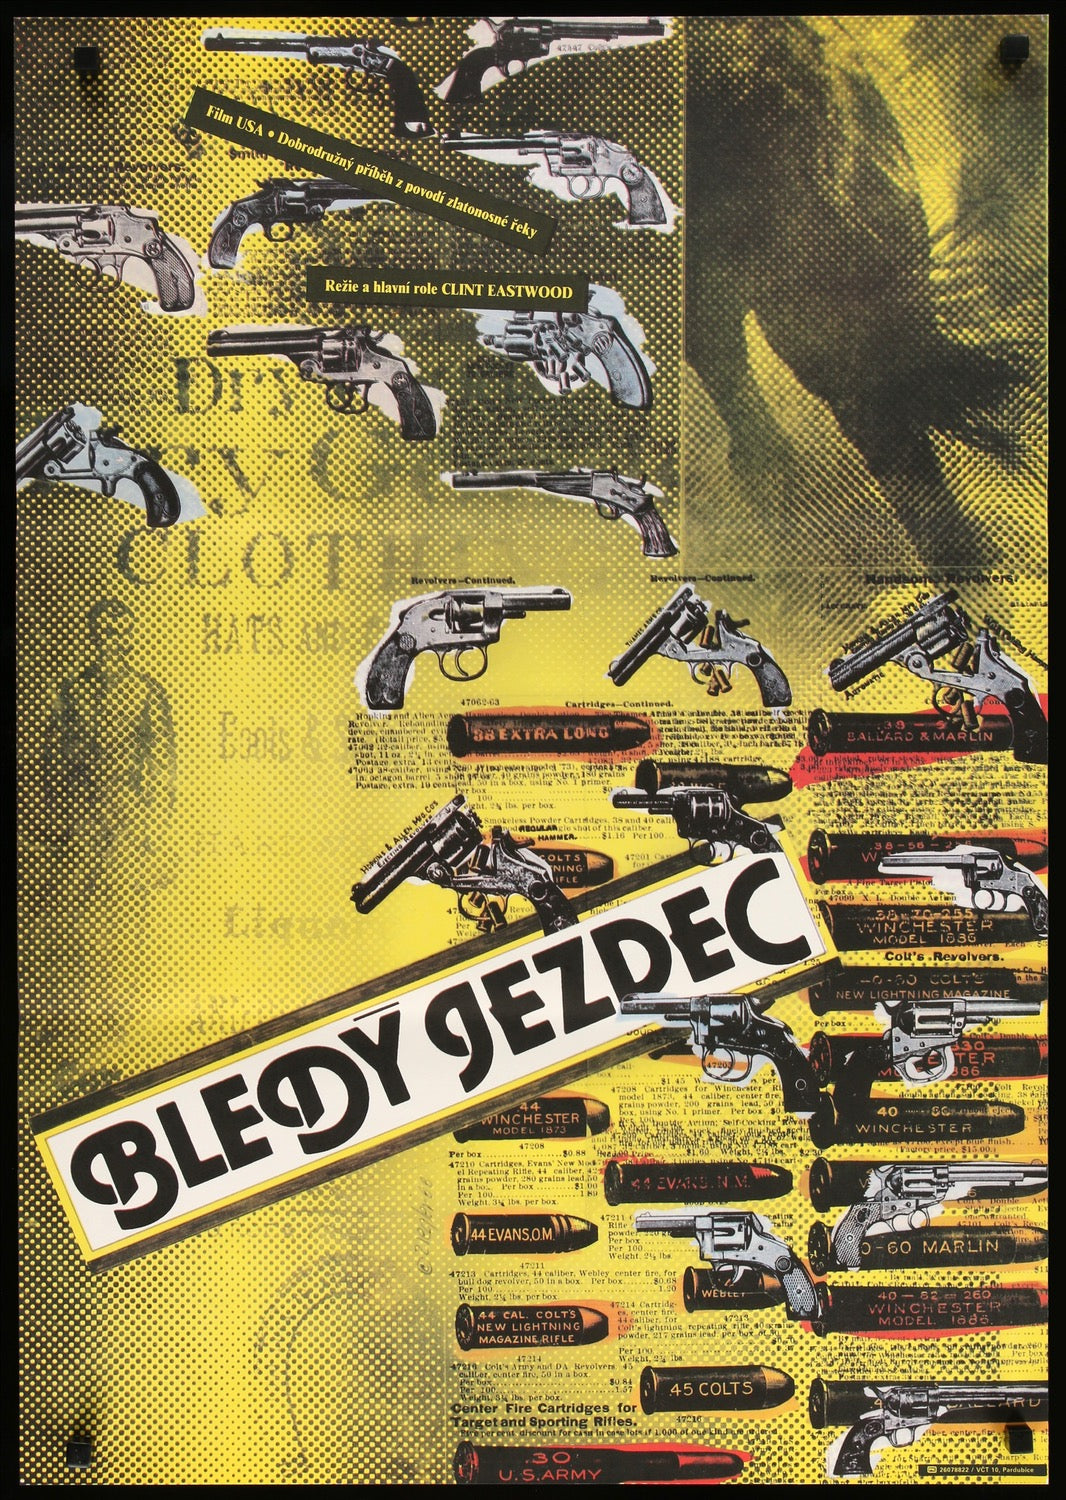 Pale Rider (1985) original movie poster for sale at Original Film Art